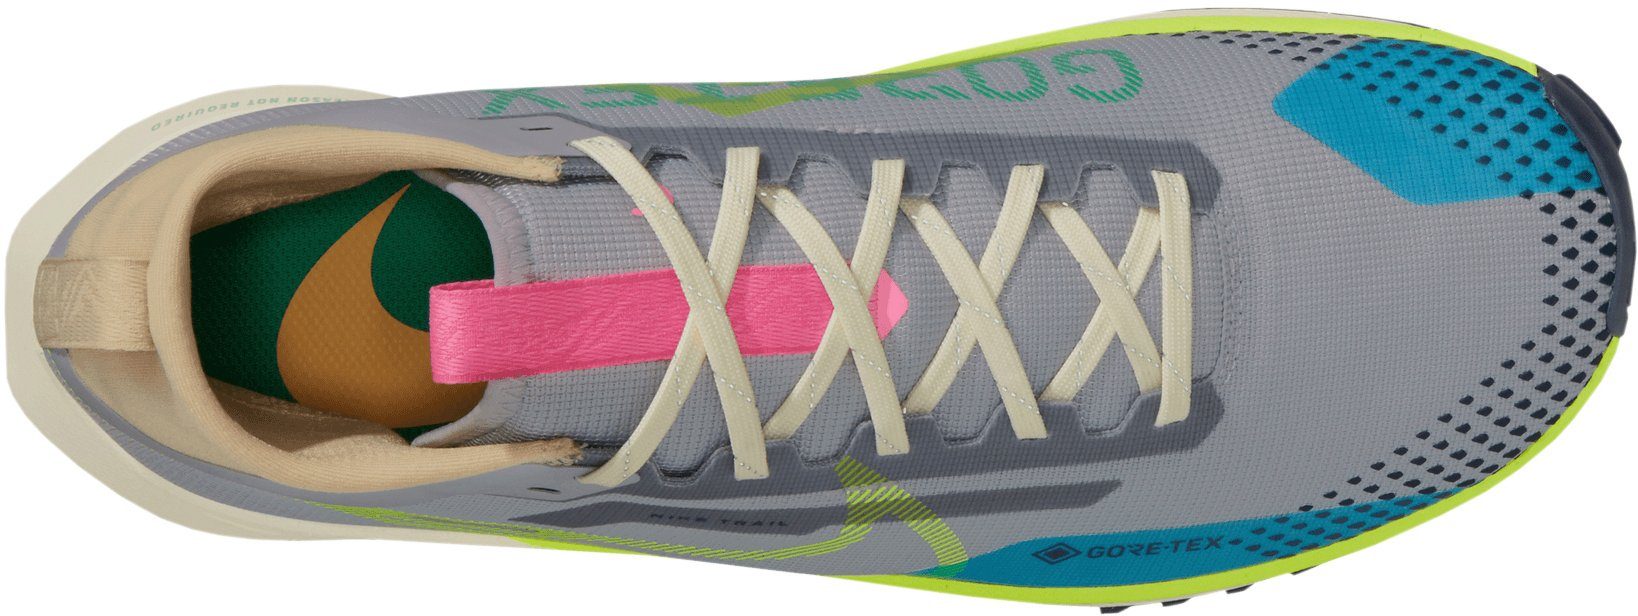 Nike Laufschuh 4 WATERPROO GORE-TEX WOLF-GREY-VOLT-STADIUM-GREEN-BALTIC-BLUE wasserdicht TRAIL PEGASUS